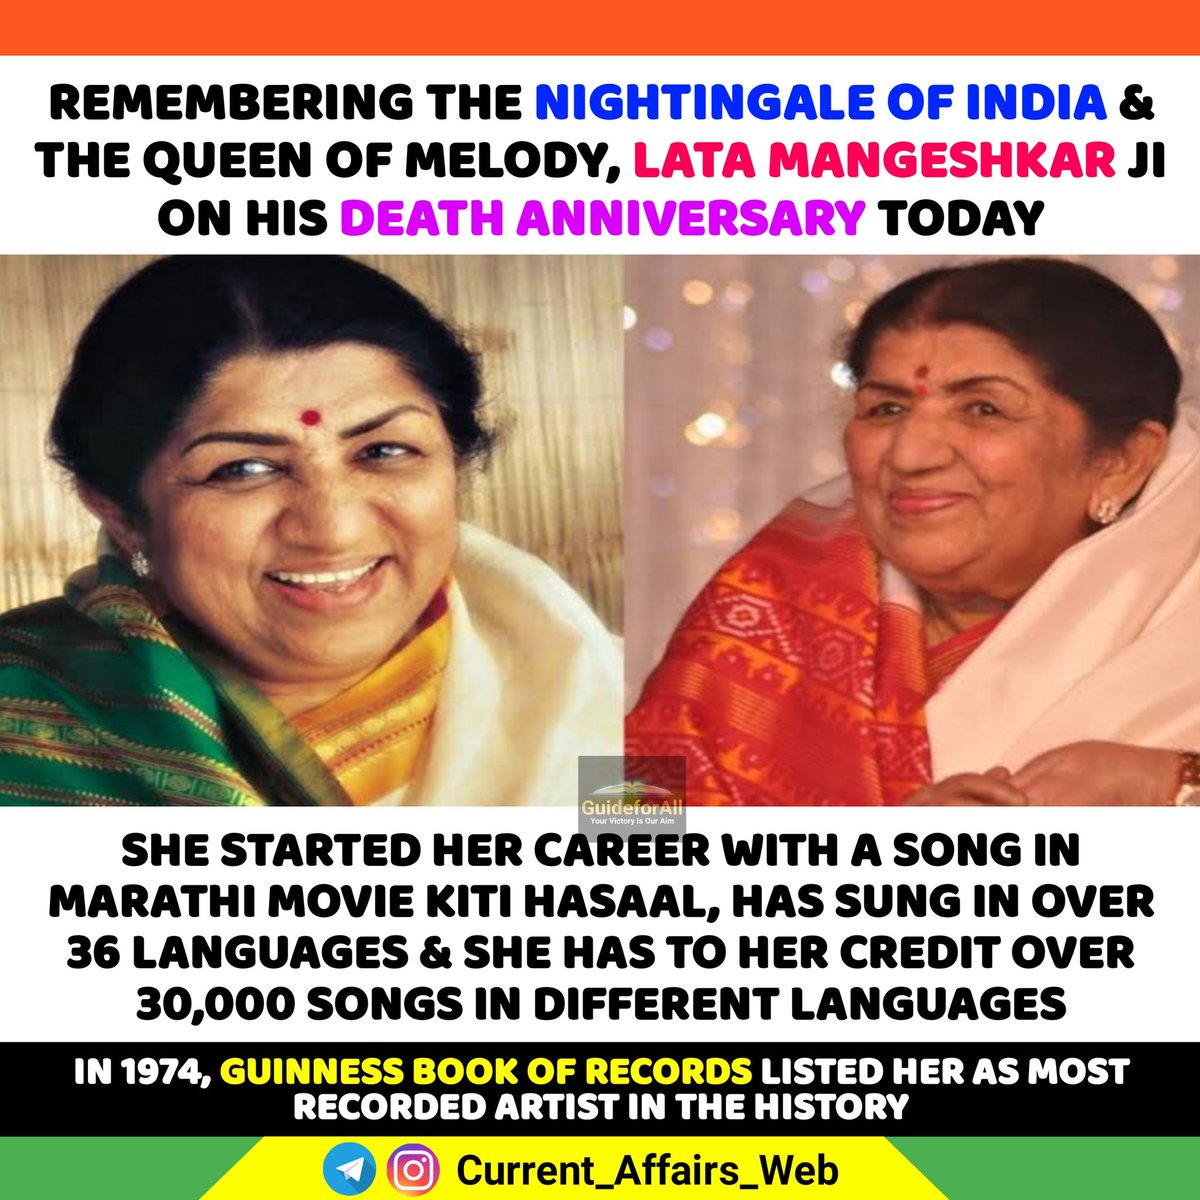 Remembering the Bharat Ratna and 'Nightingale of India' Lata Mangeshkar ji on his death anniversary.

#लता_मंगेशकर #LataMangeskar #GK